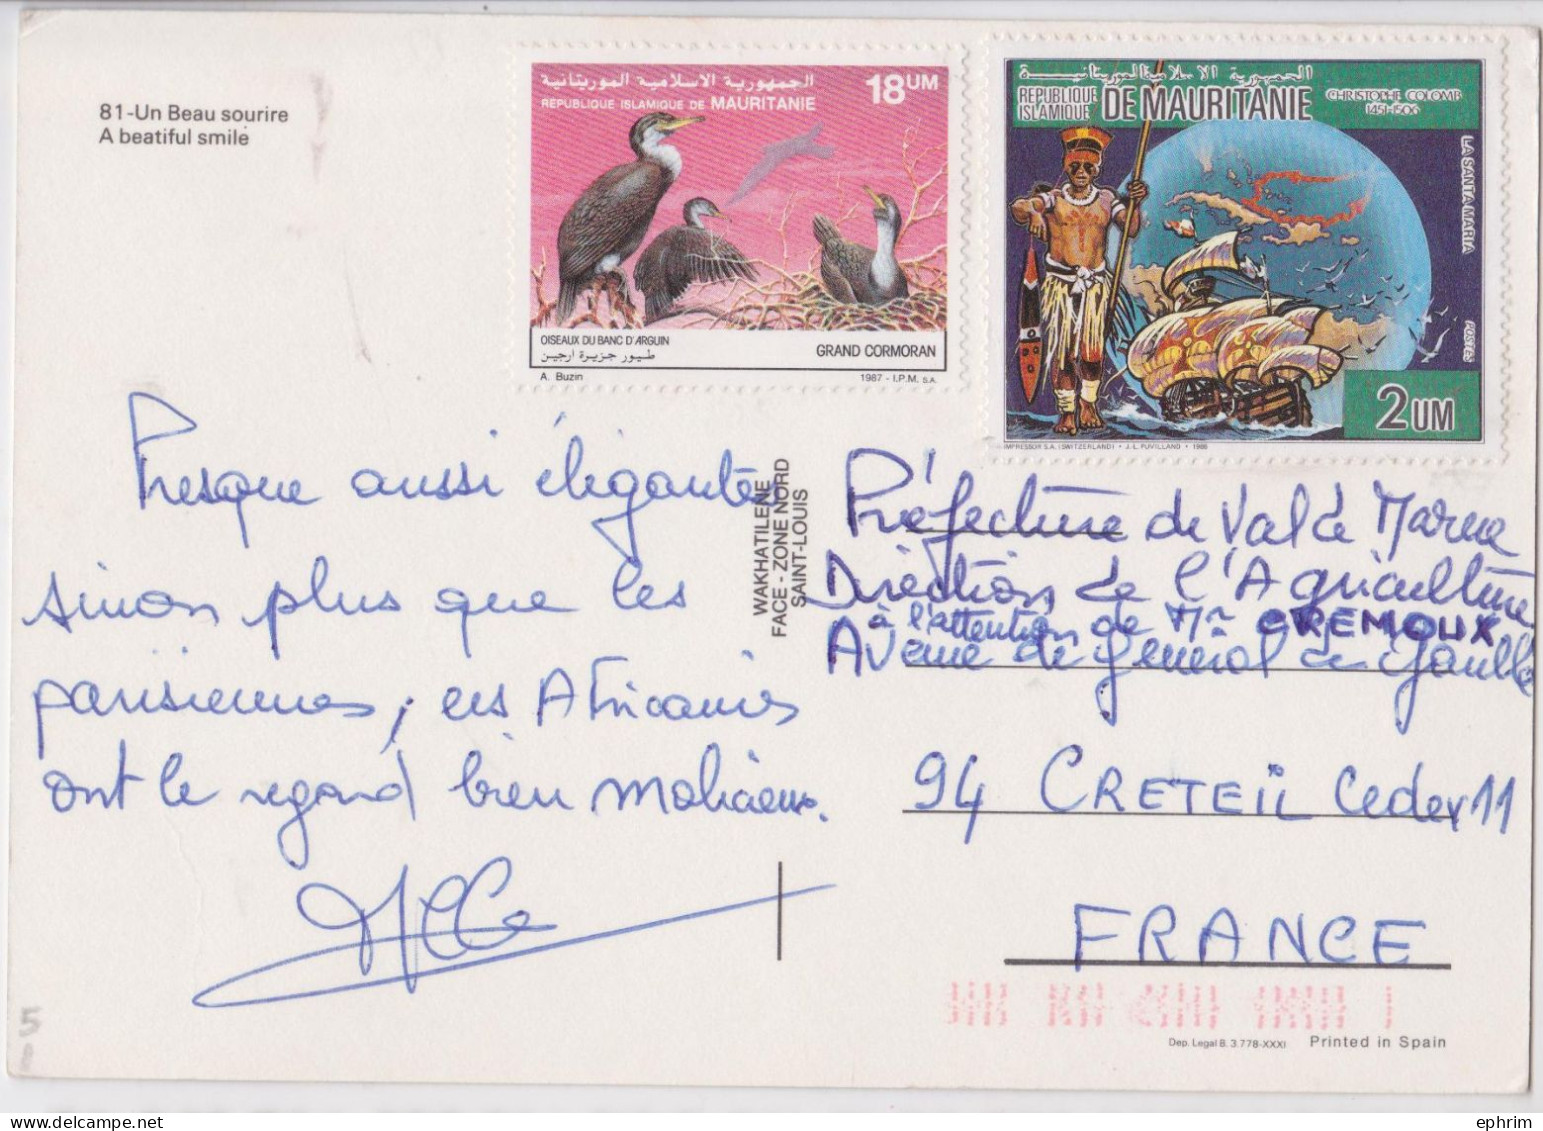 Mauritanie Mauritania Carte Postale Timbre Oiseau Christophe Colomb Cristobal Colon La Santa Maria Bird Stamp Sello - Mauretanien (1960-...)